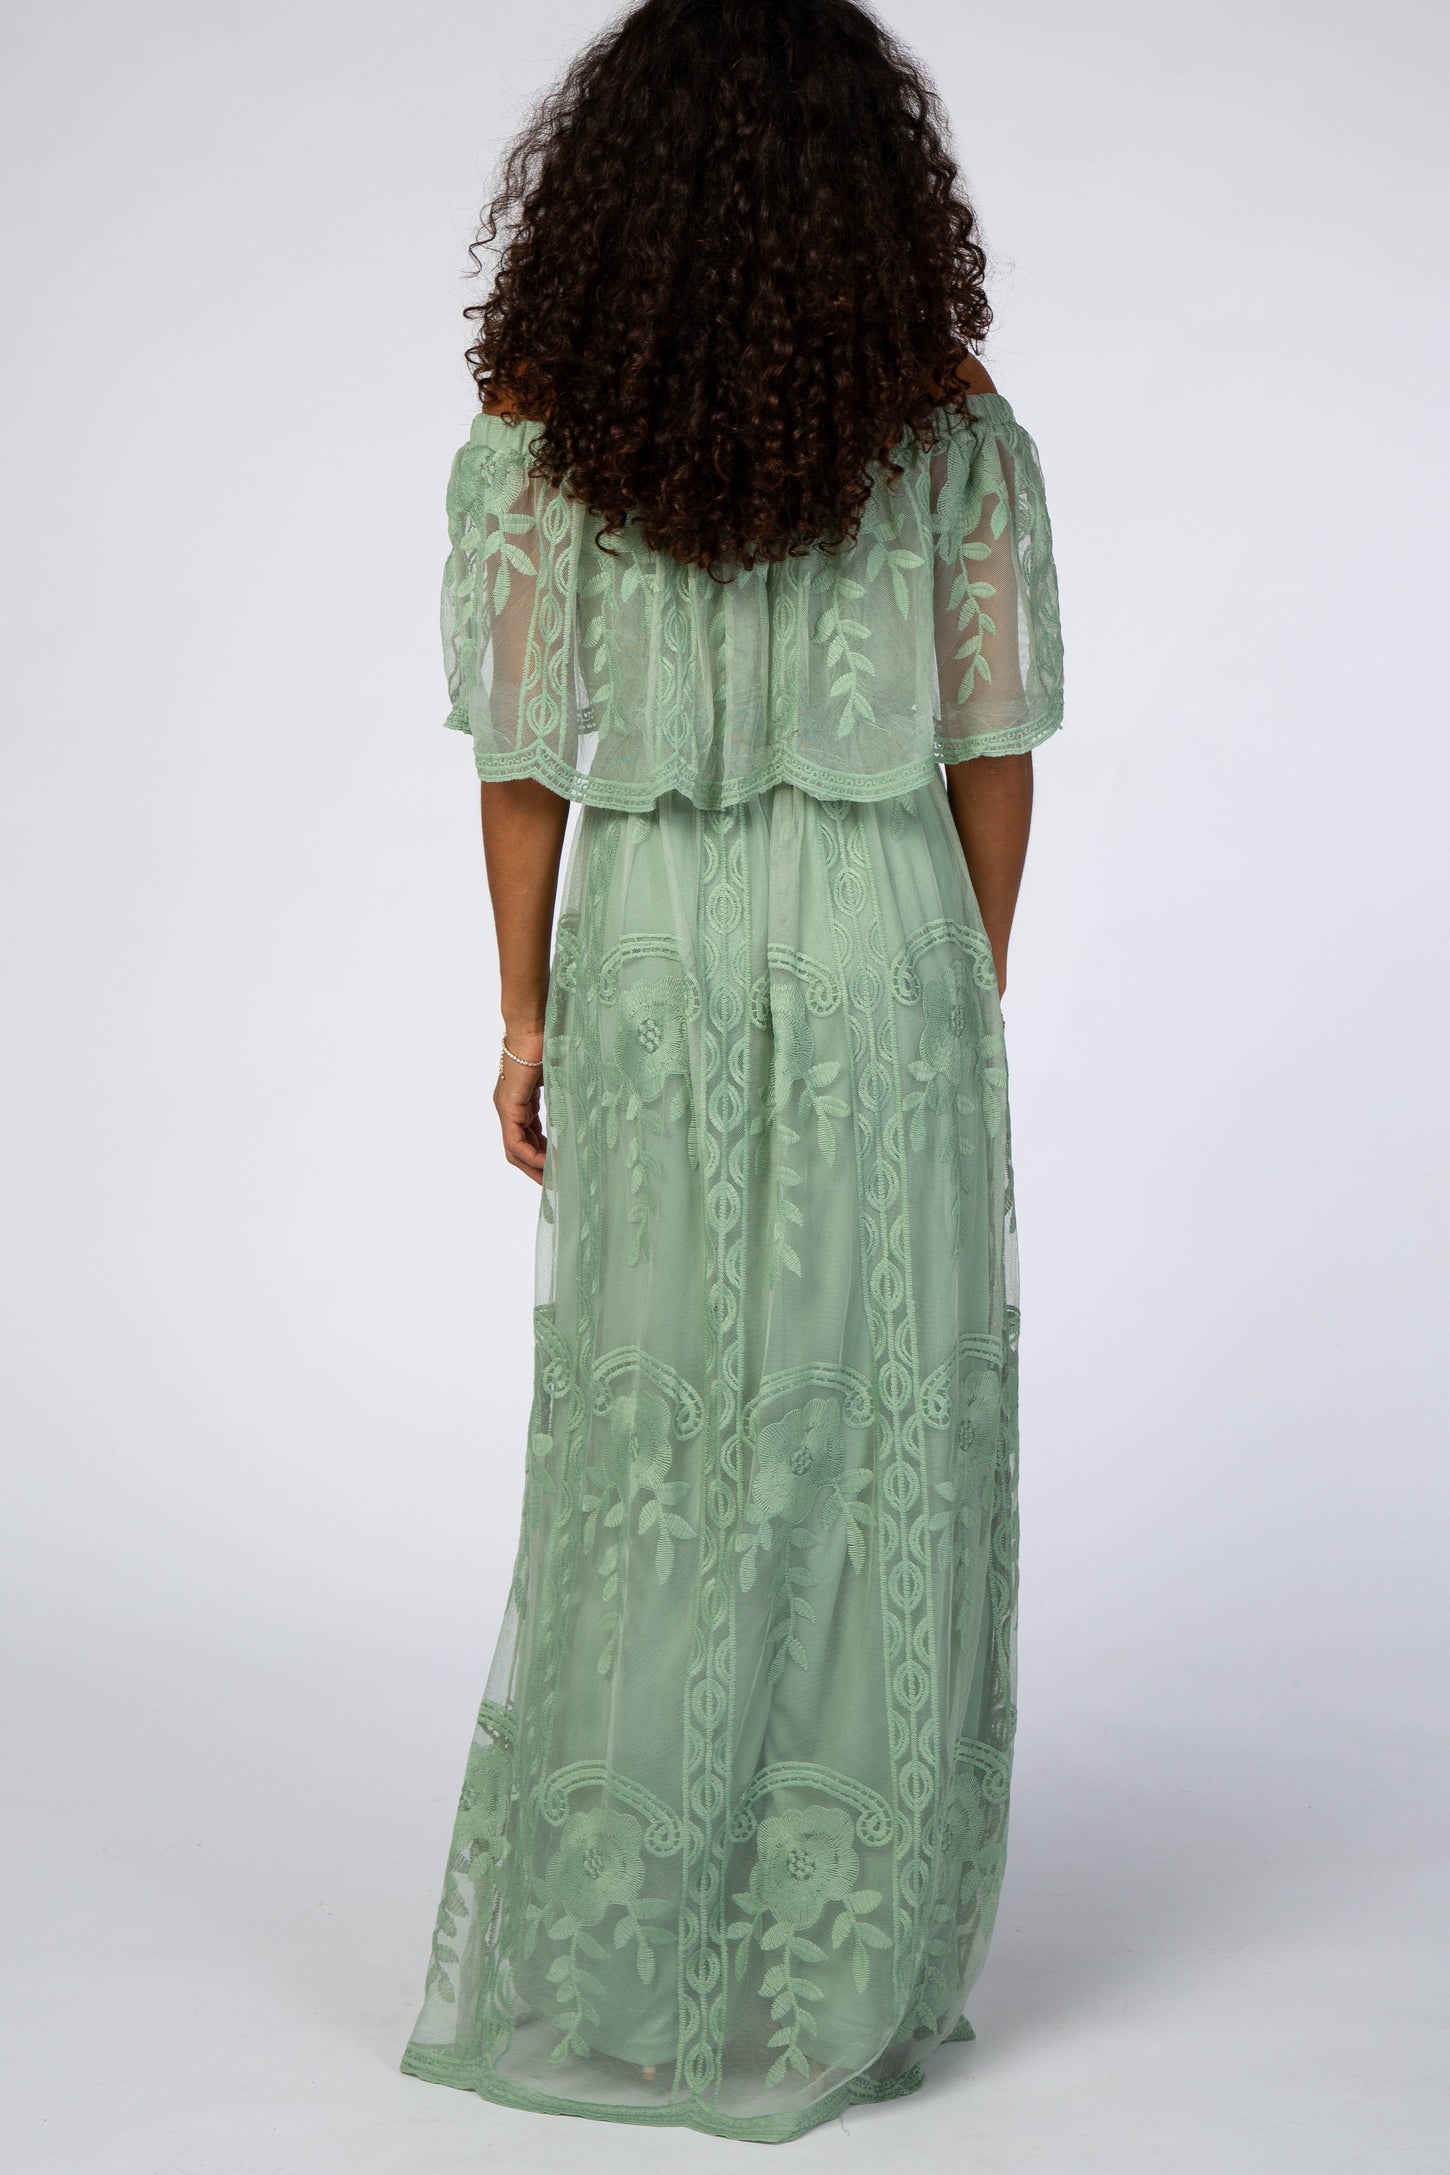 Light Olive Lace Overlay Off Shoulder Flounce Maxi Dress